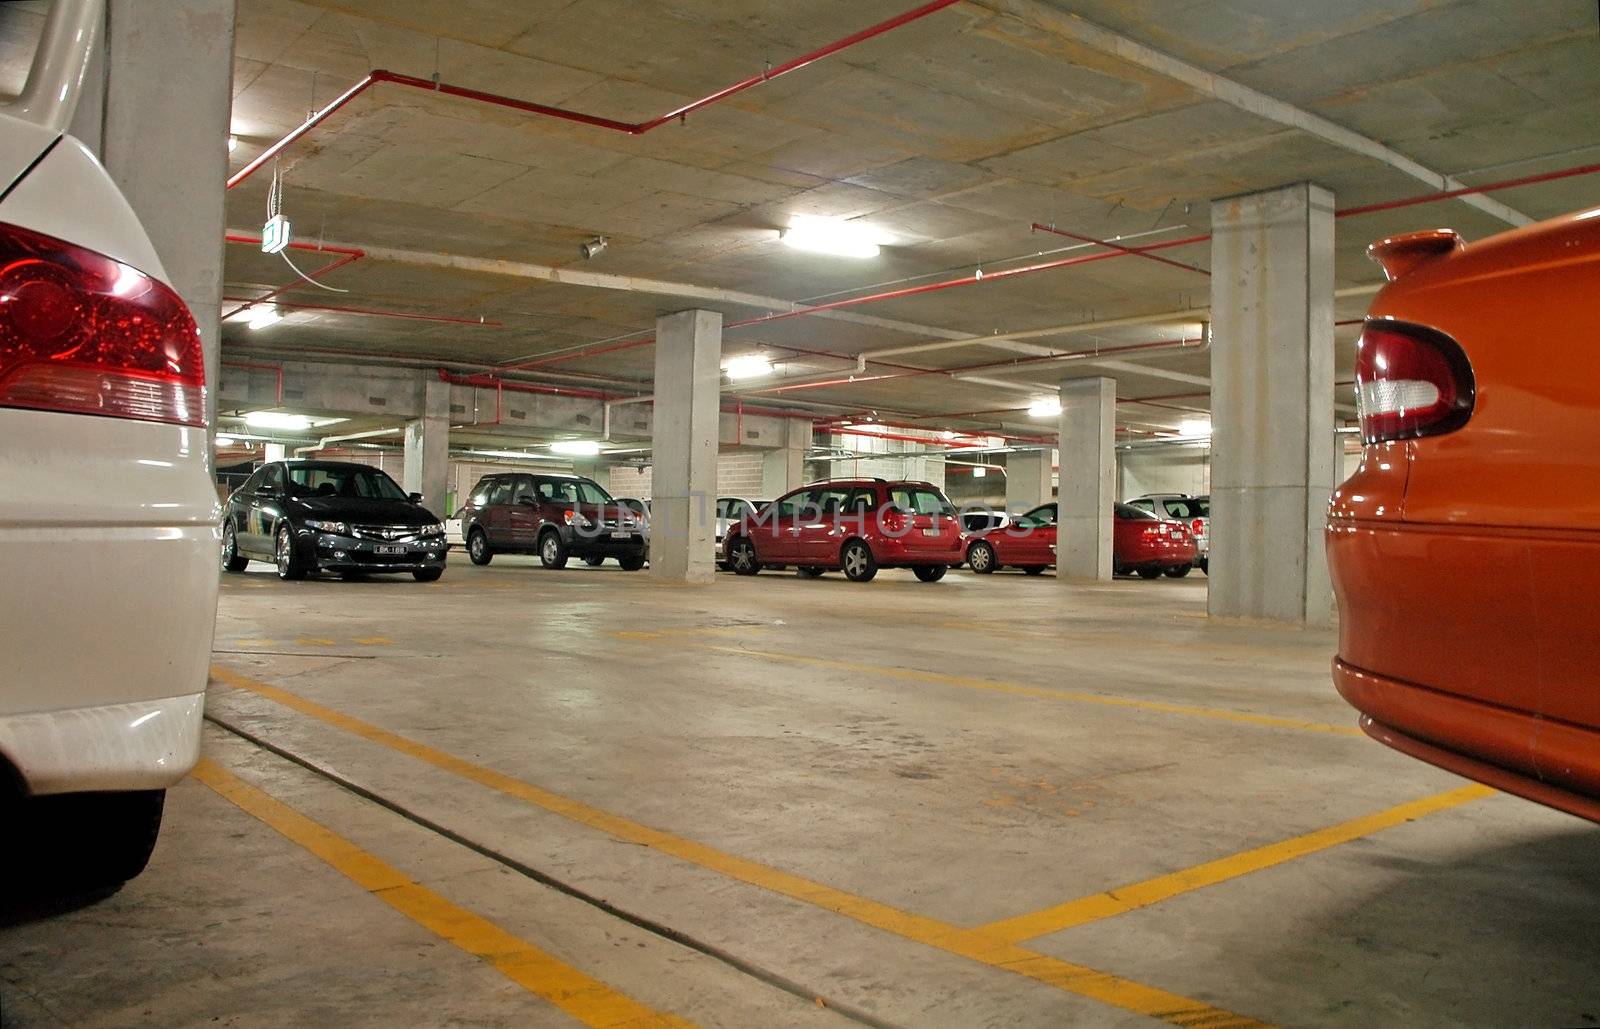 car park floor view, several cars, grey pillars